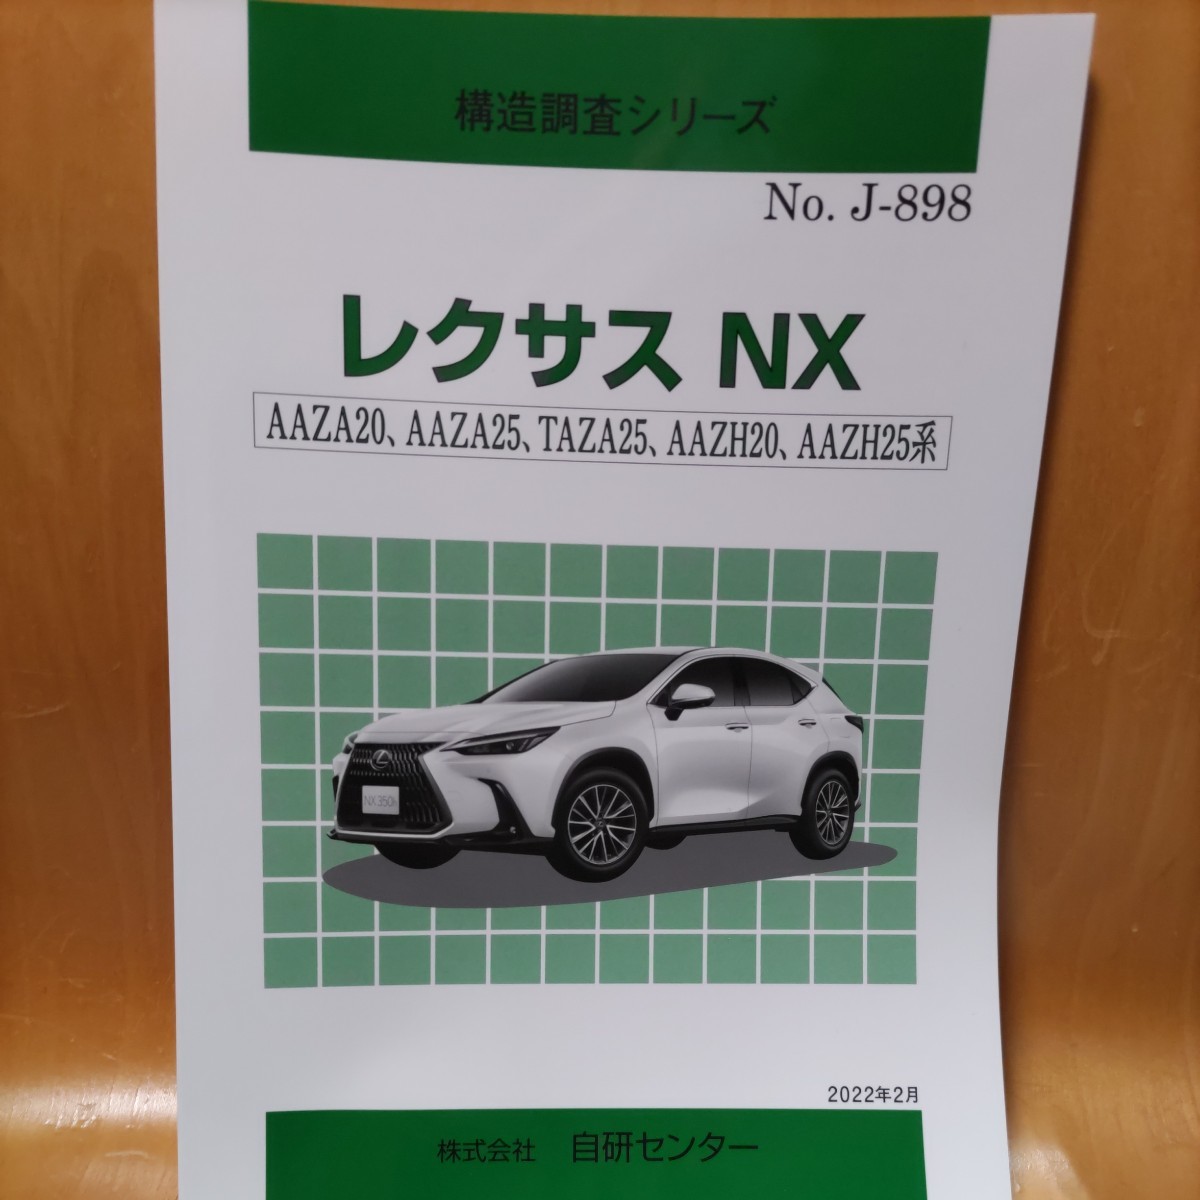 [ great popularity ] structure investigation series Lexus NX AAZA20,AAZA25,TAZA25,AAZH20,AAZH25 series 